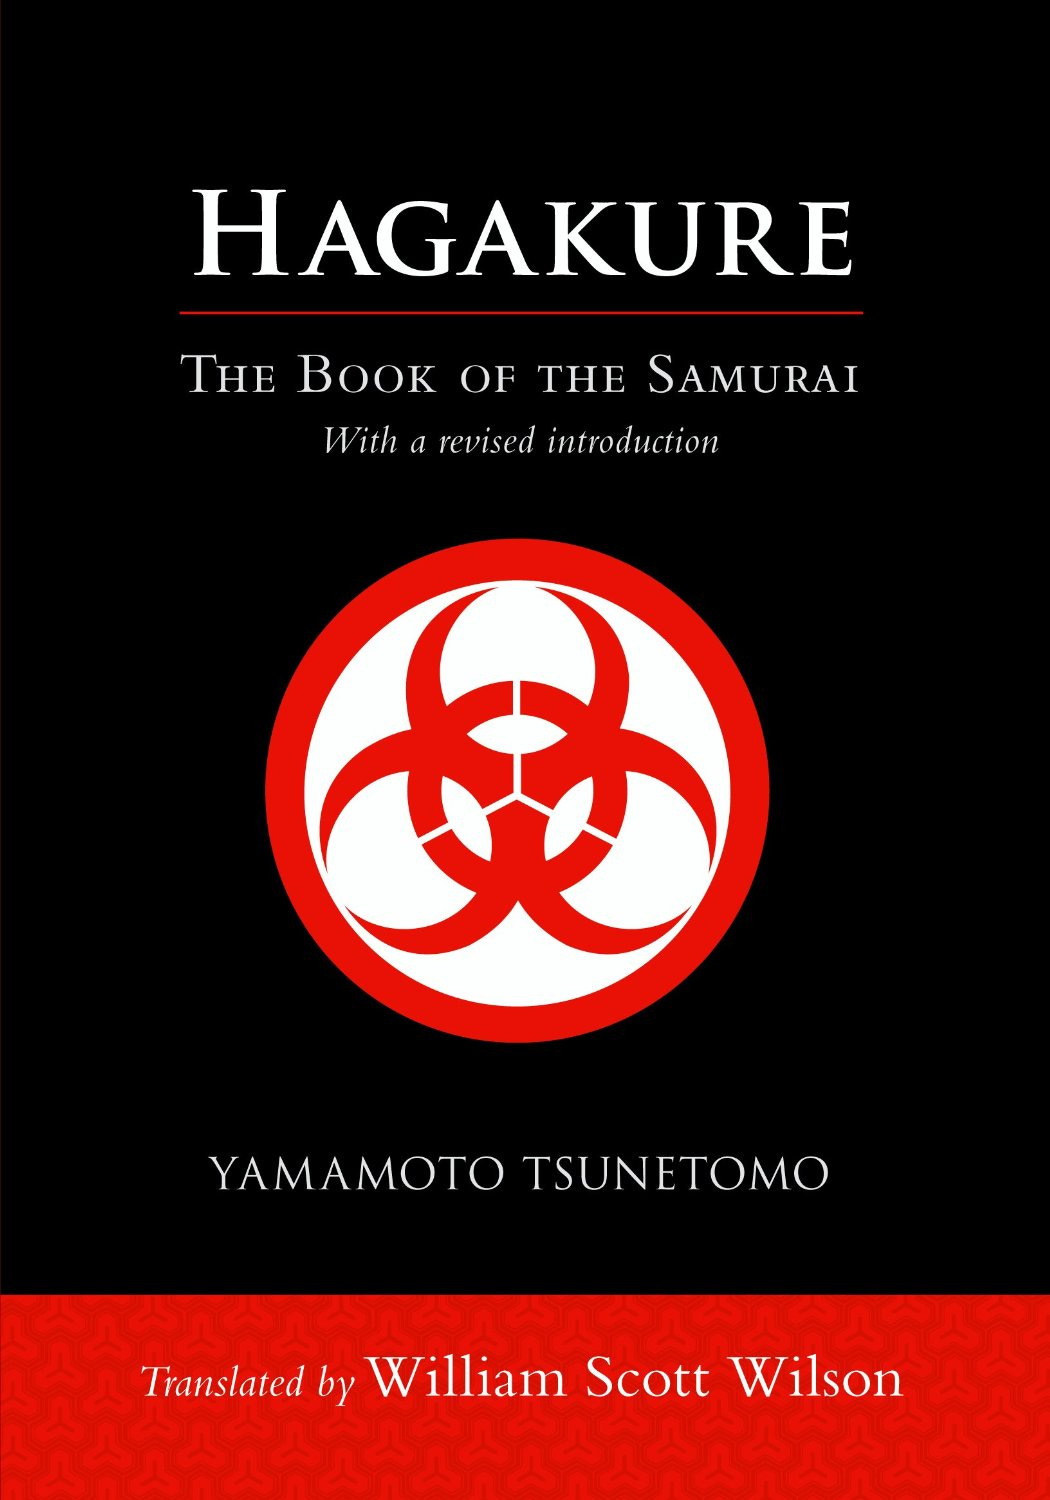 Hagakure: The Book of the Samurai by Yamamoto Tsunetomo ...